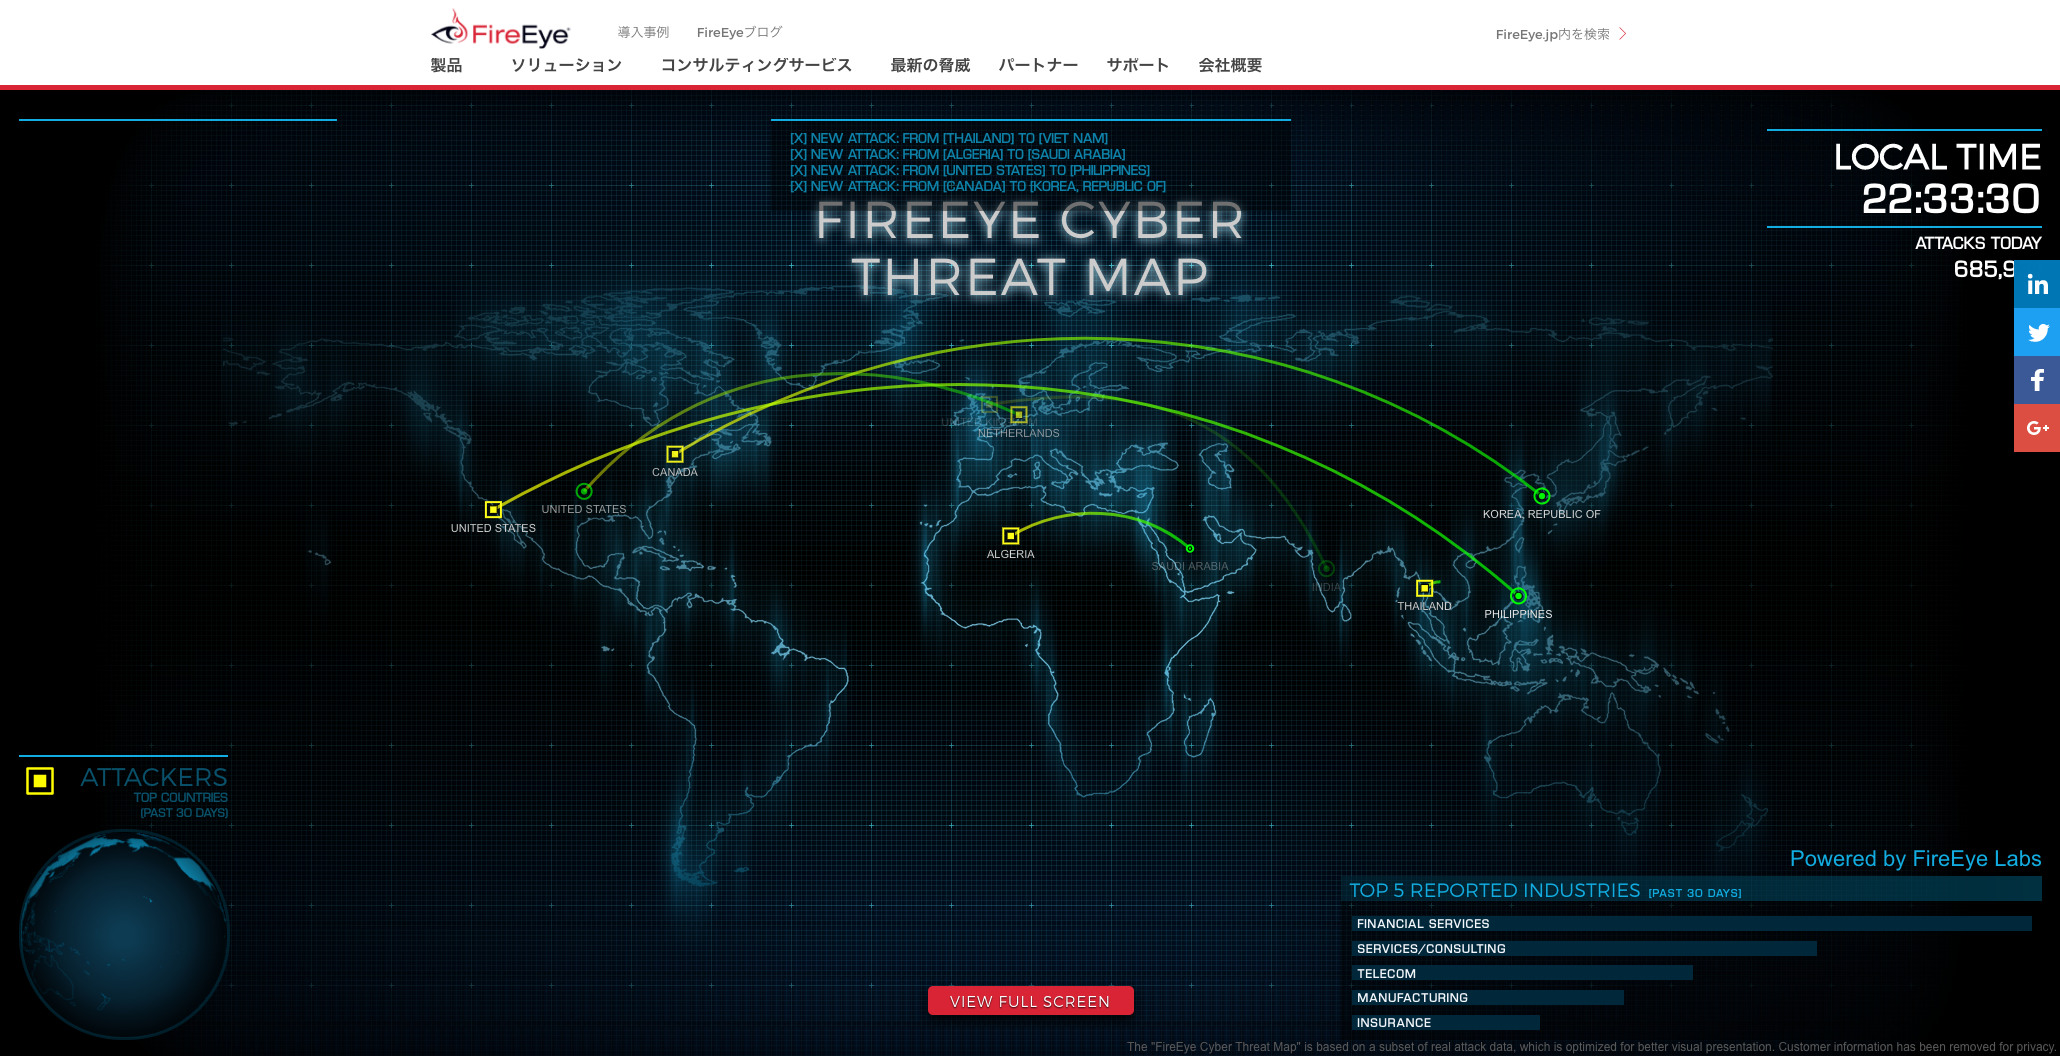 Fireeye Cyber THREAT MAP